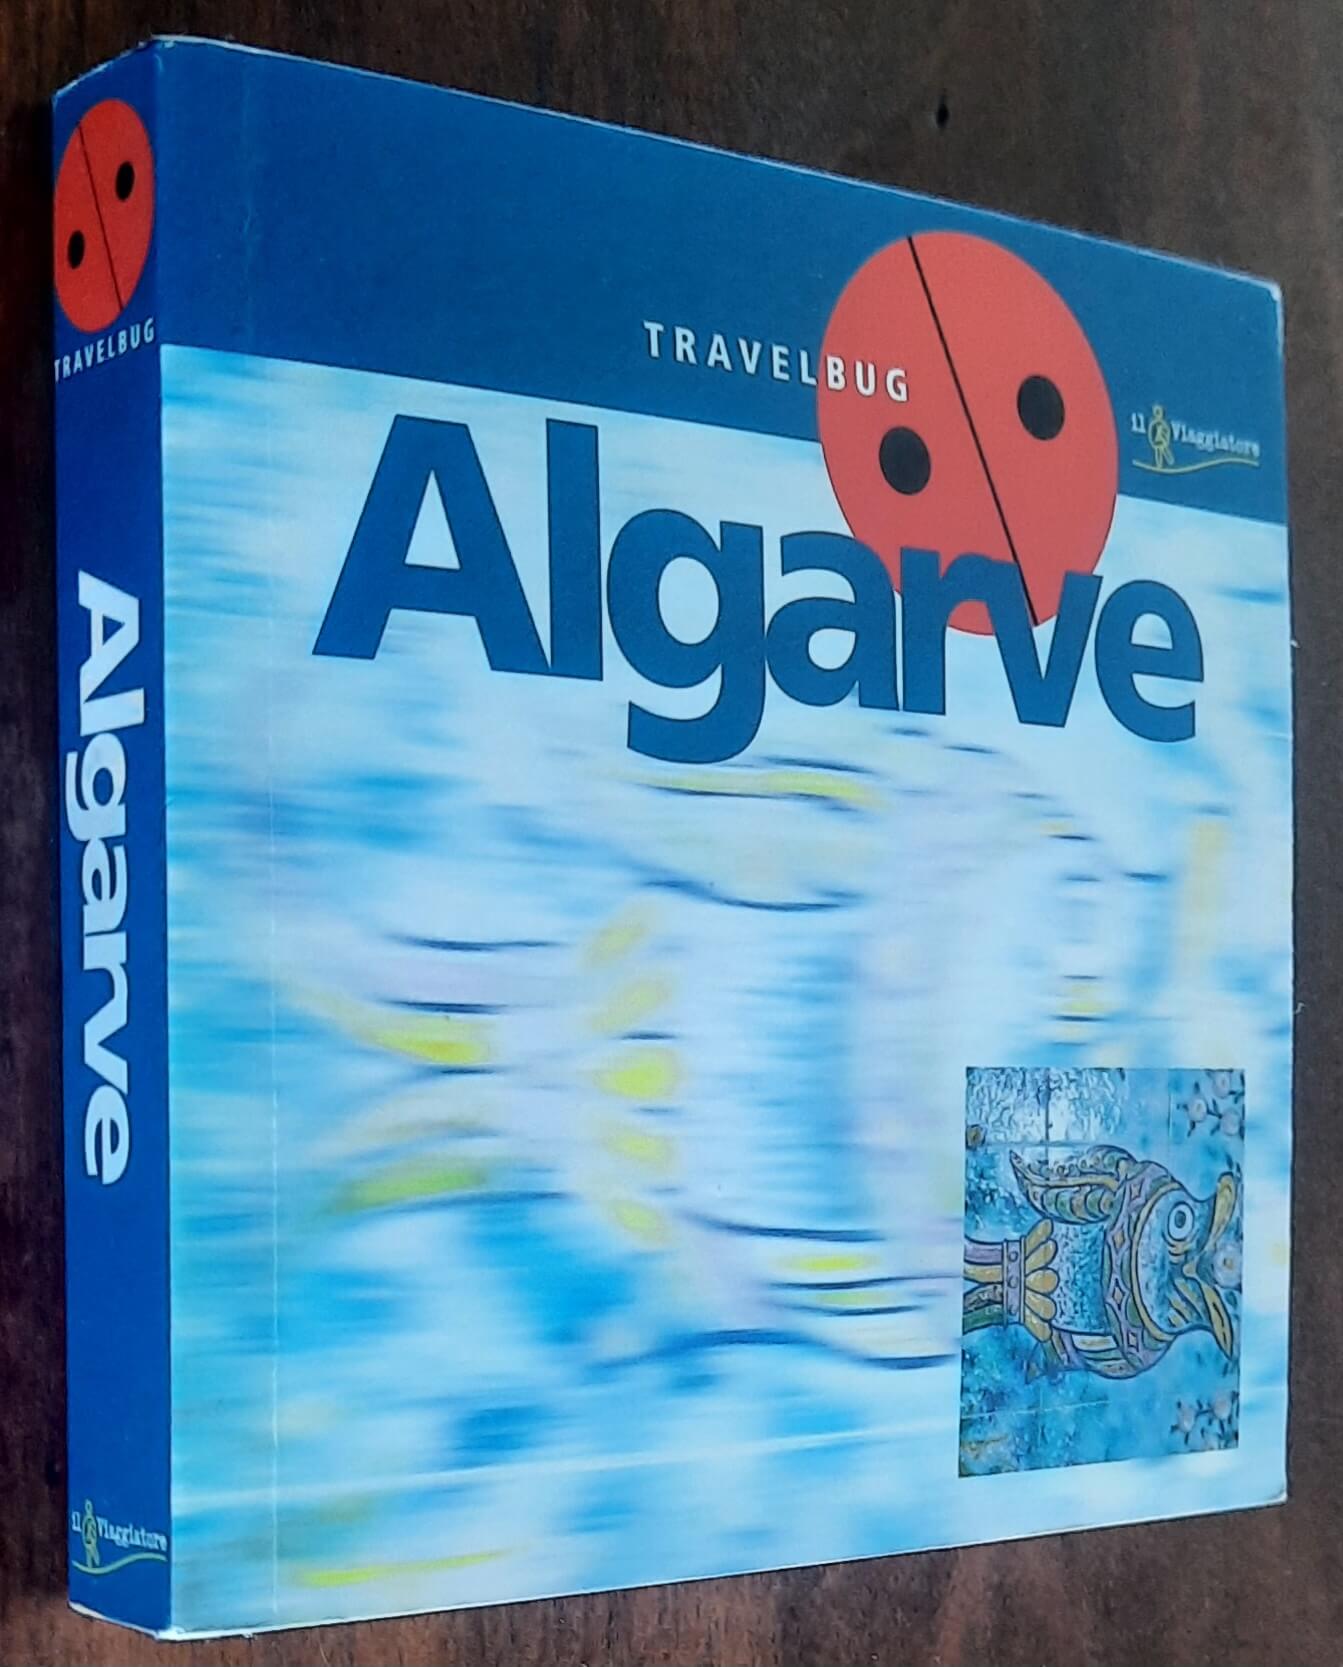 Algarve - Guide Travelbug - Touring Club